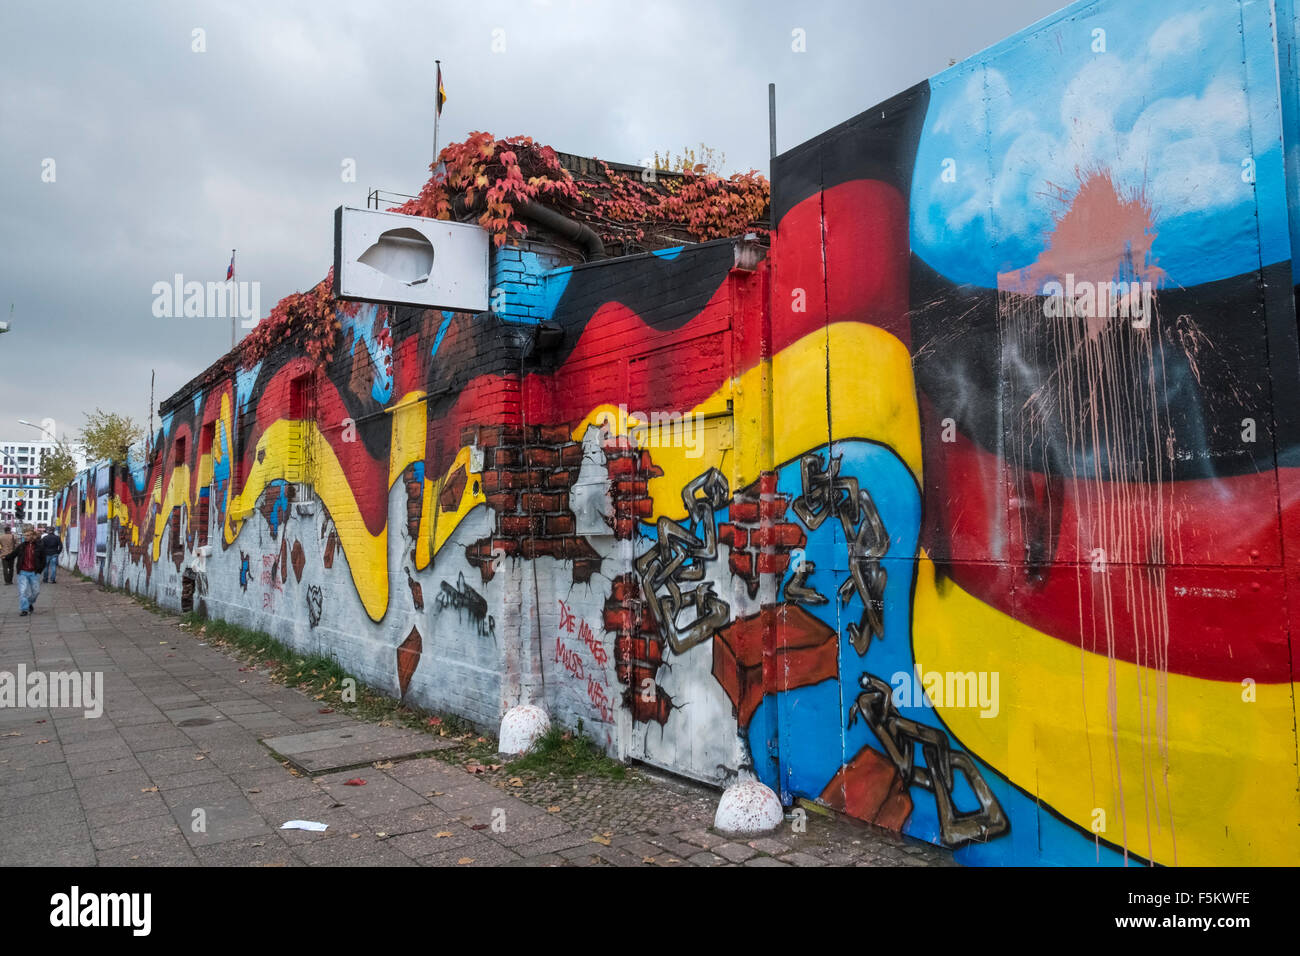 East Side Gallery artwork on the former Berlin Wall, Friedrichshain, Berlin, Germany, Europe. Stock Photo